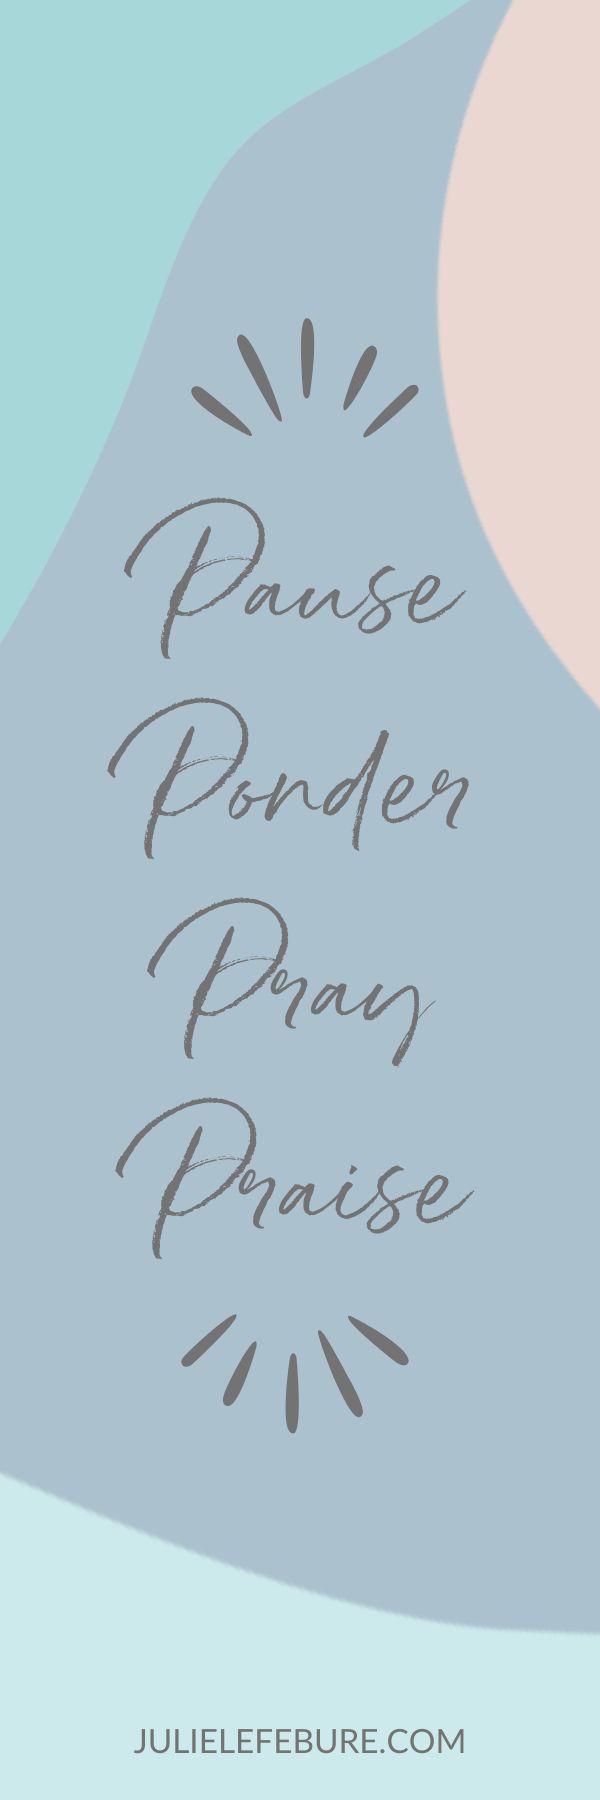 Pause Ponder Pray Praise 